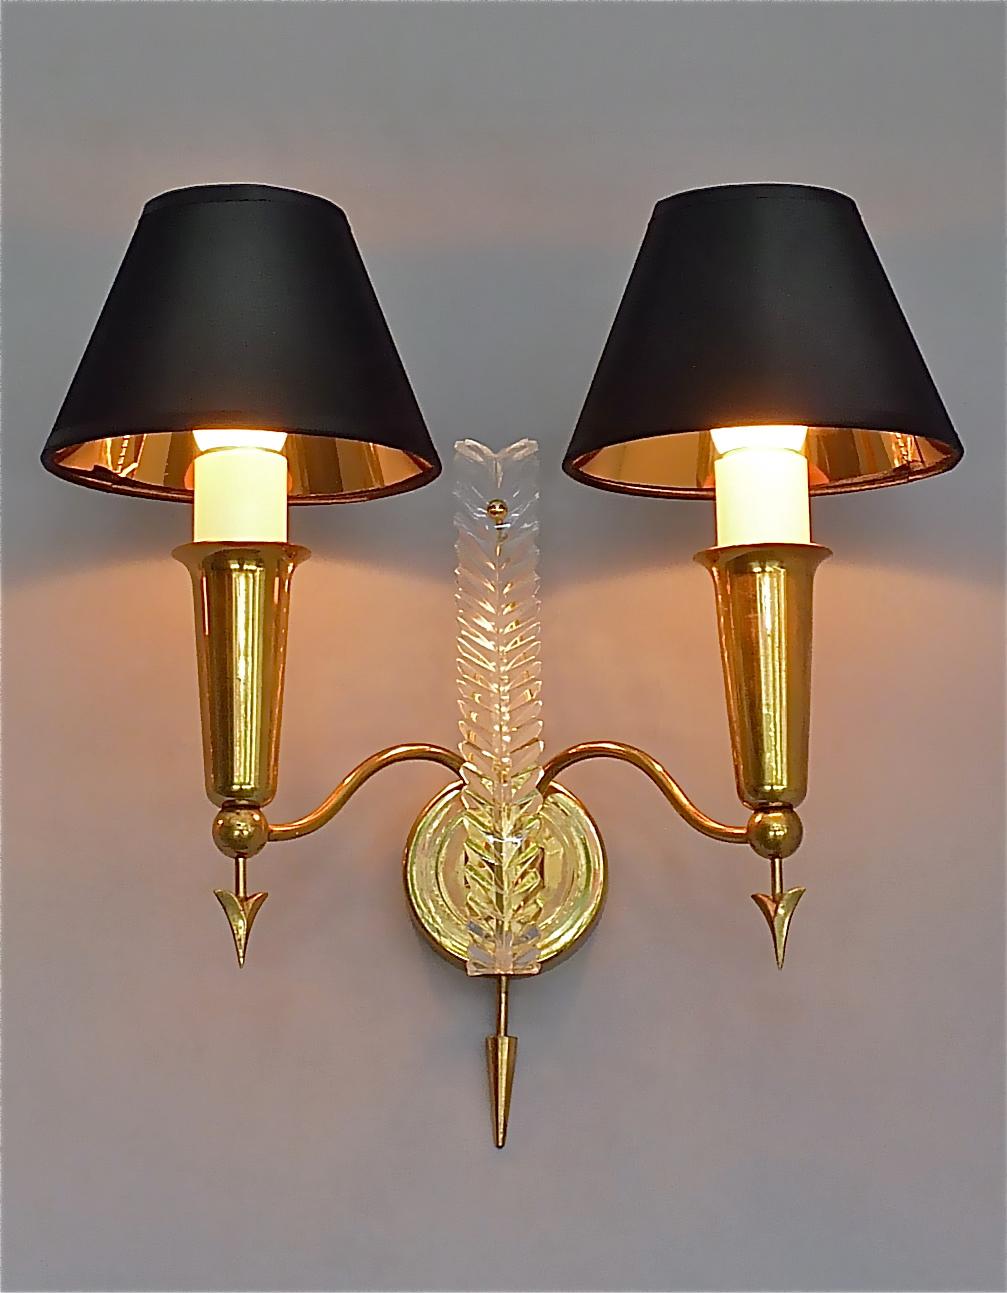 Pair of Maison Arlus Midcentury Sconces Jansen Arrow Brass Lamp, Gio Ponti Style 12